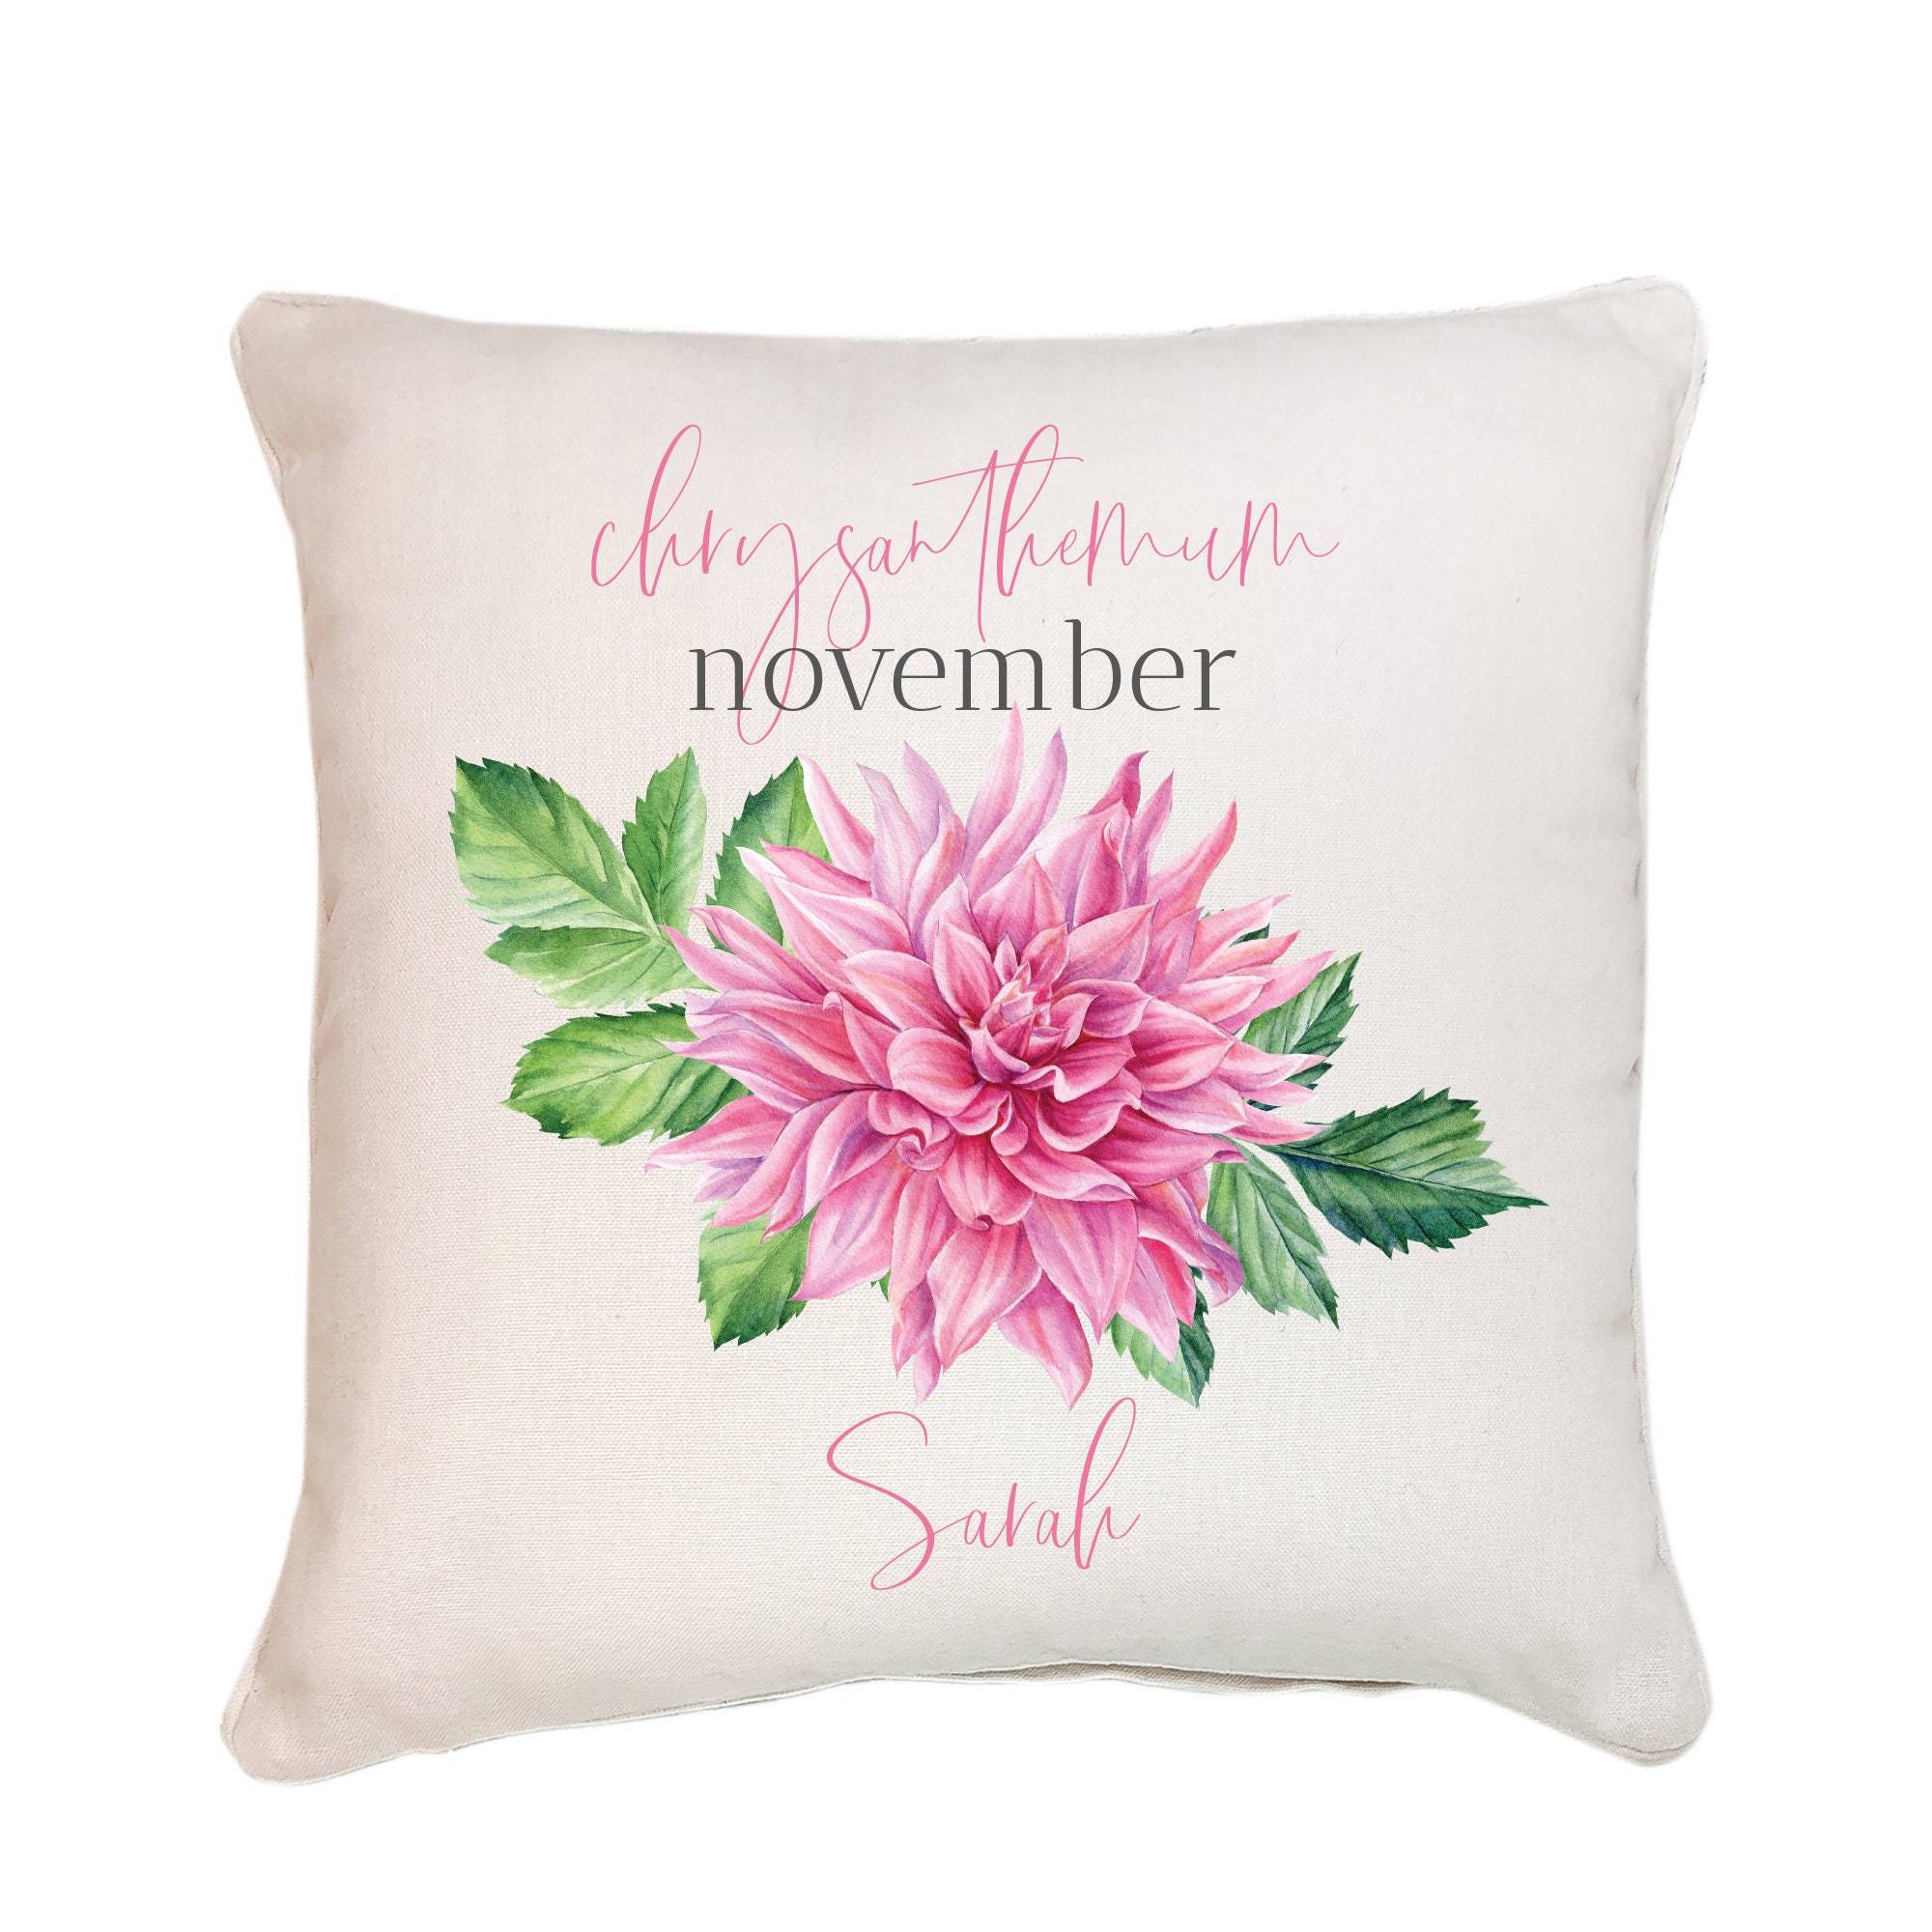 Personalised birth flower cushion, November birth flower chrysanthemum, Floral design